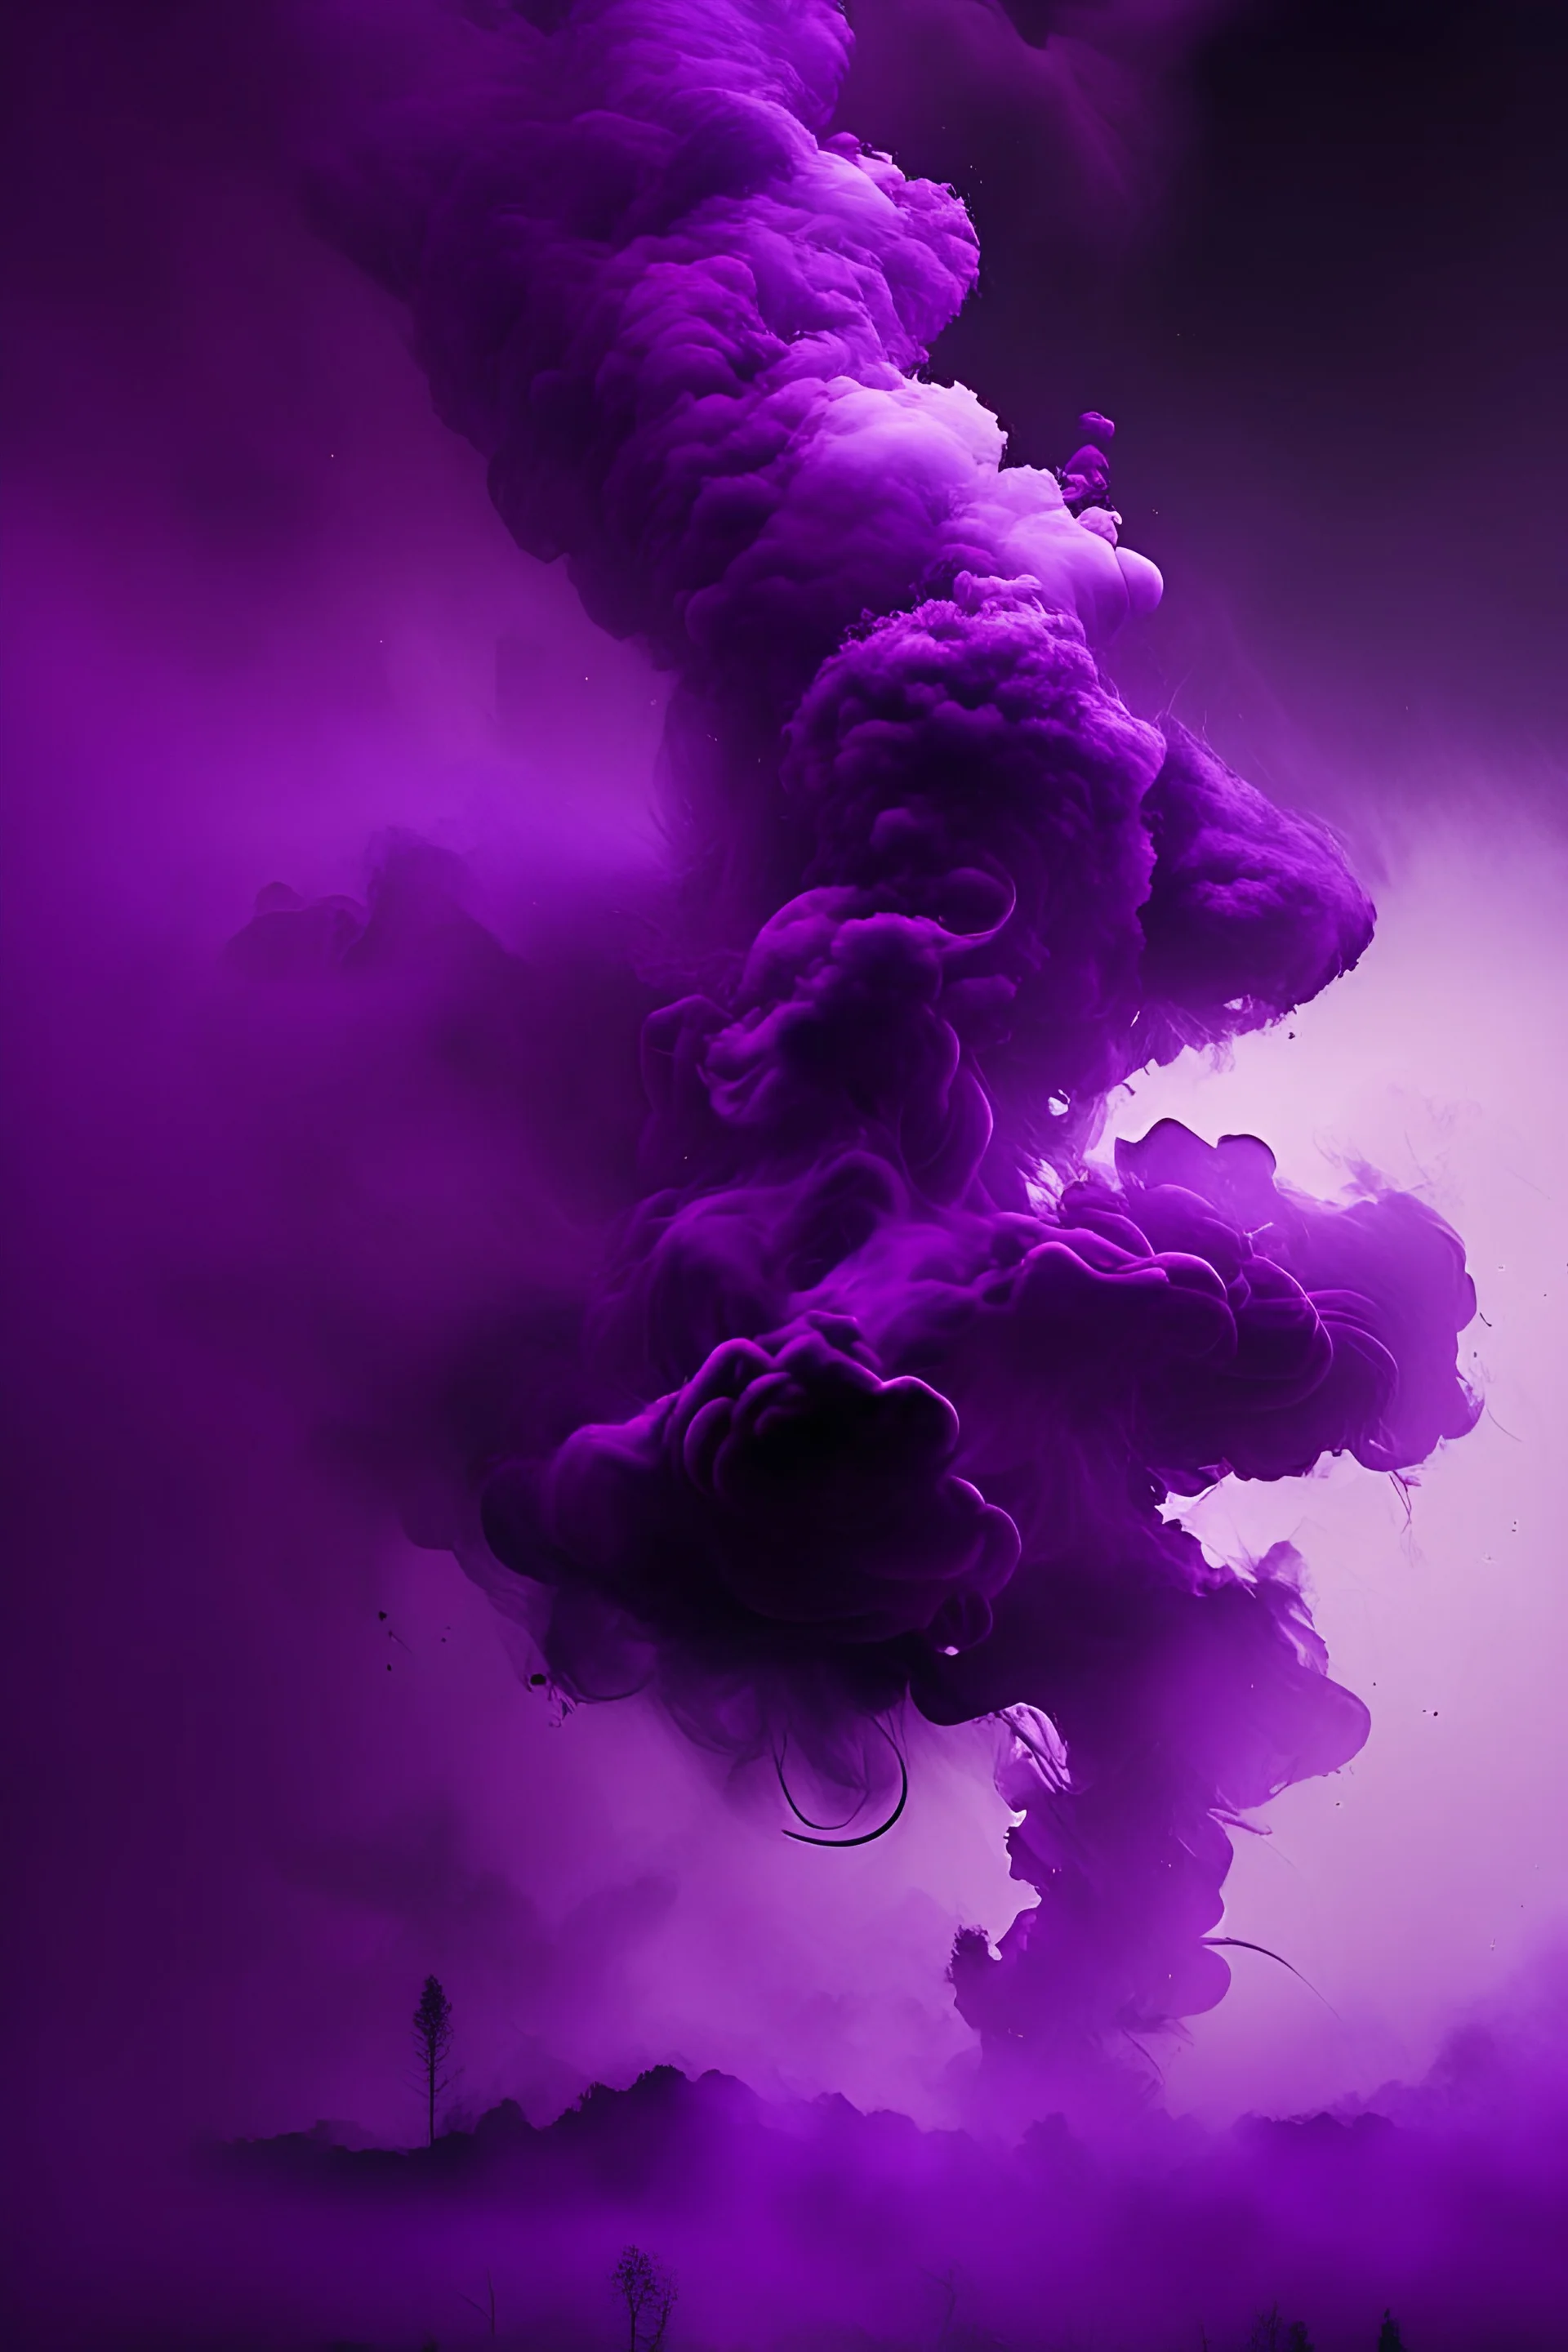 purple haze